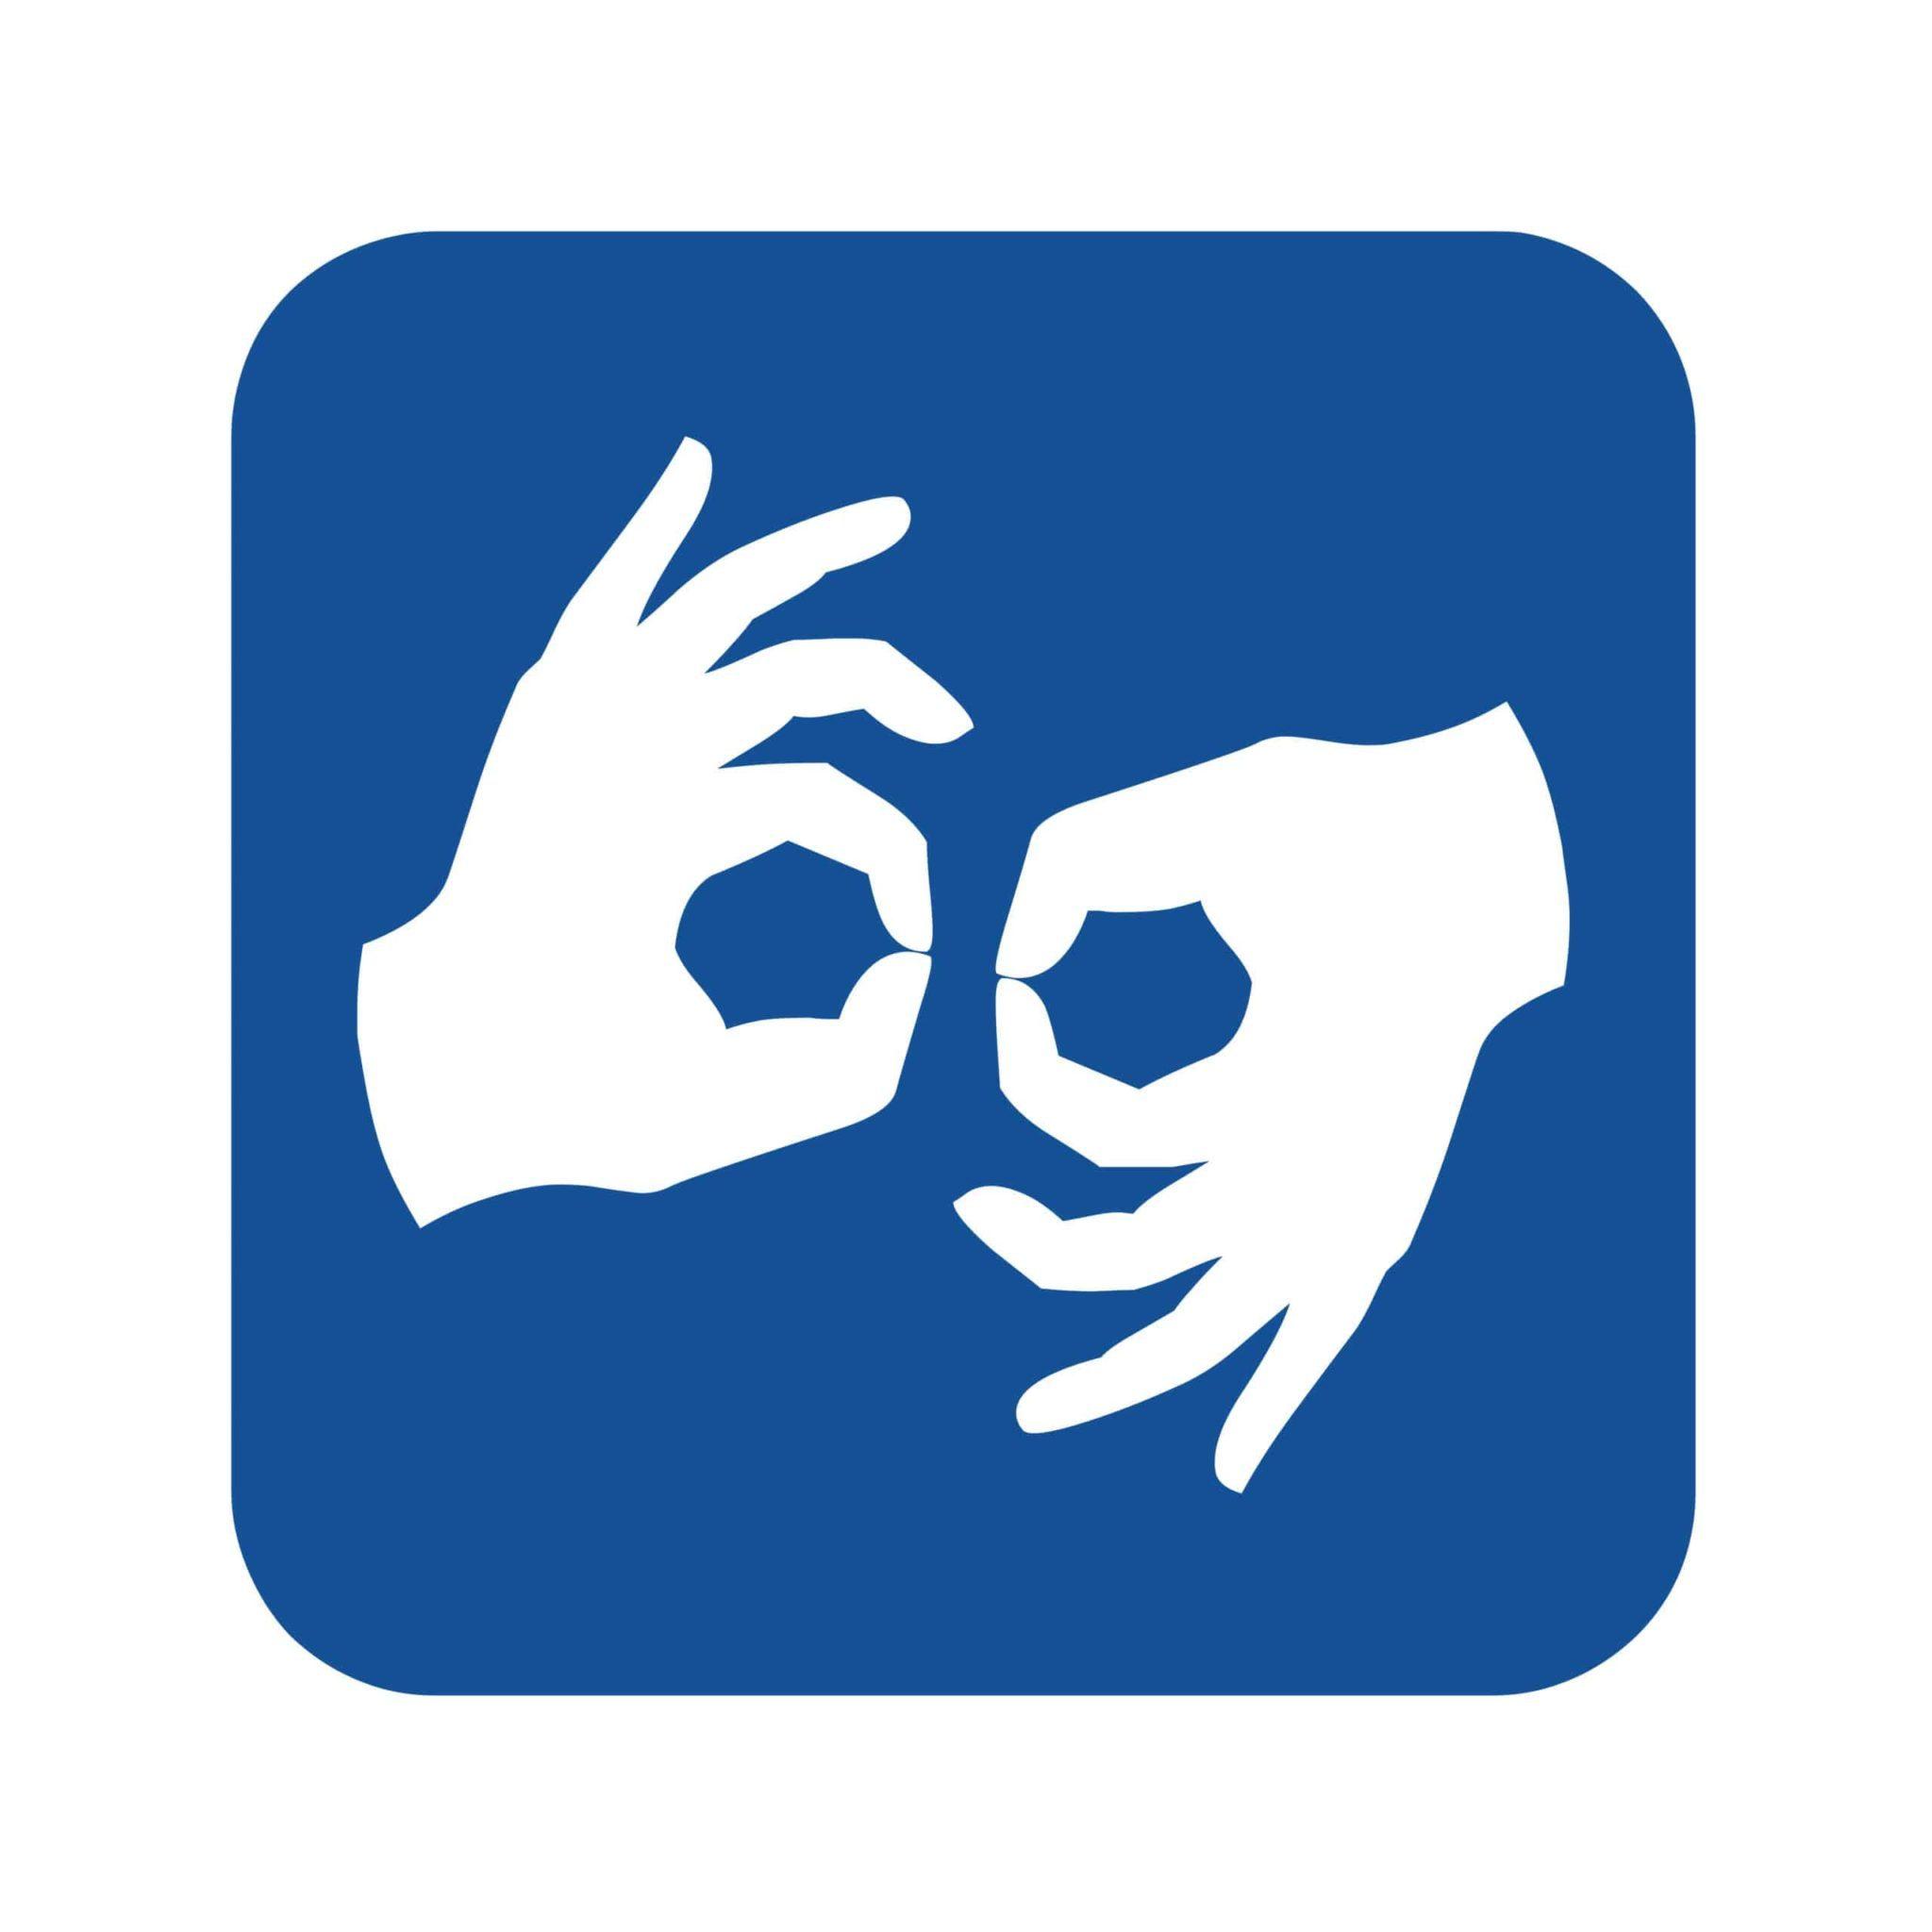 Accessibility sign language interpretation